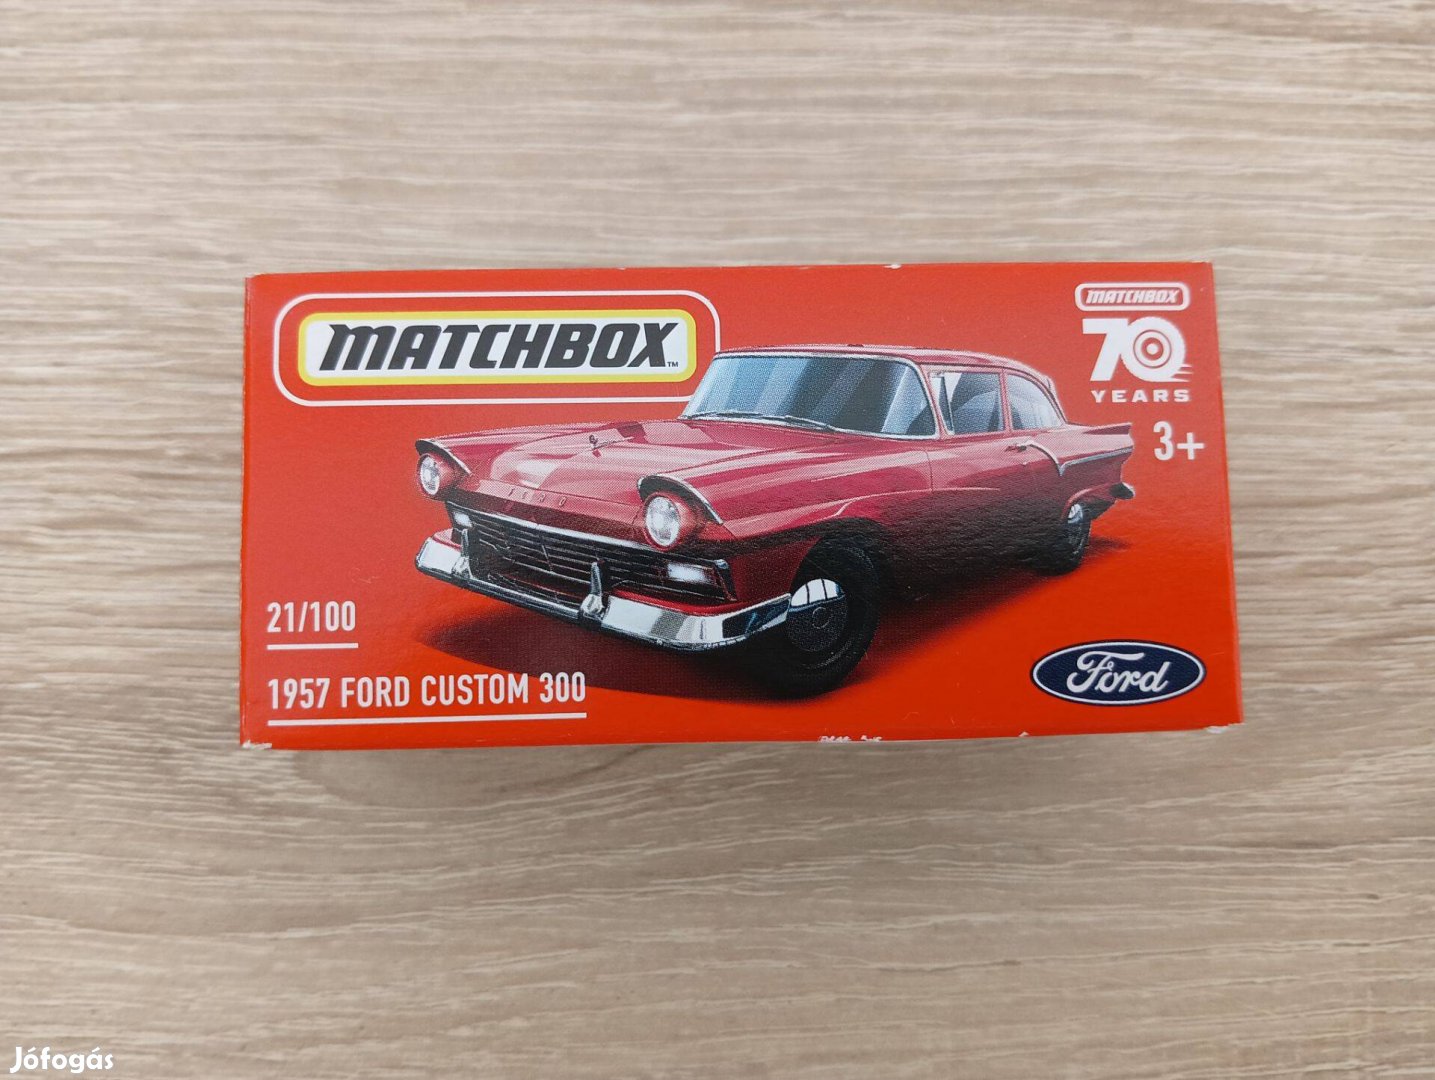 Matchbox 1957 Ford Custom 300 red 21/100